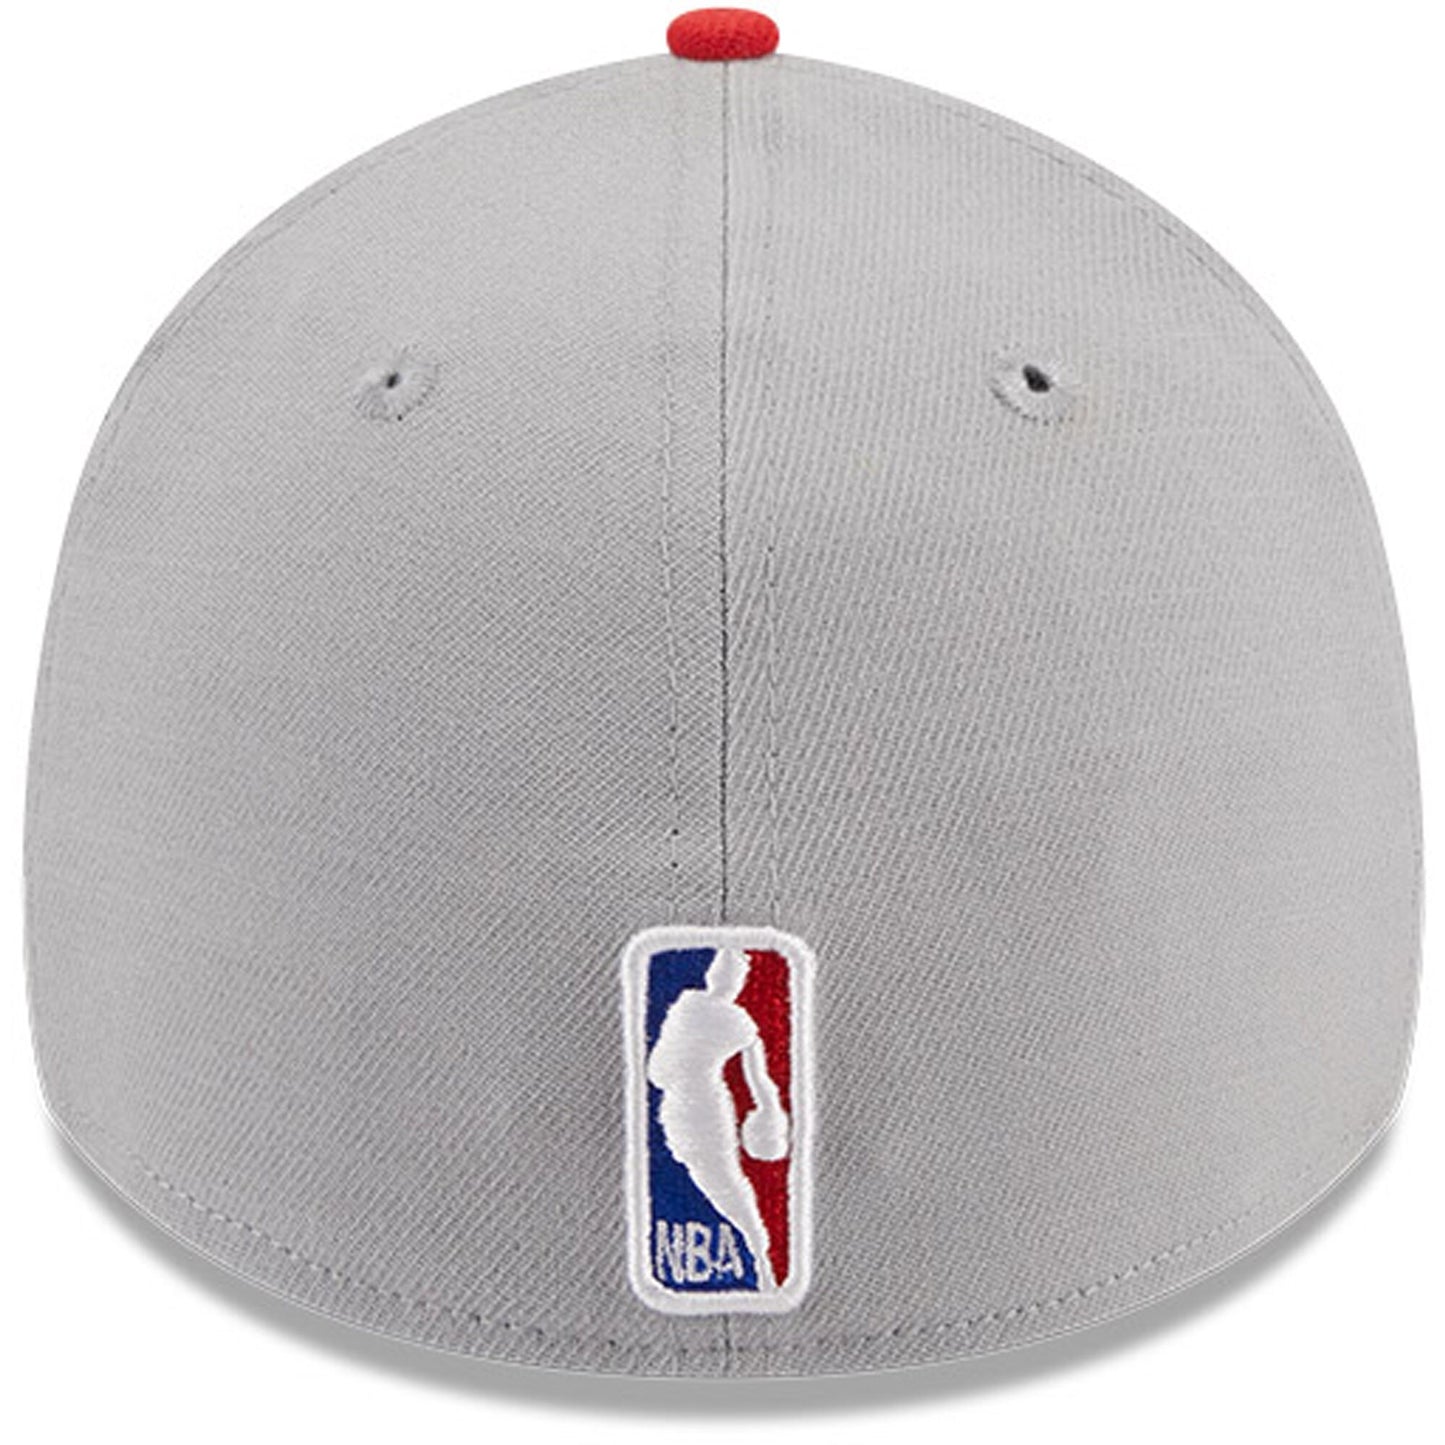 Men's Chicago Bulls New Era Gray/Red Tip-Off Two-Tone 39THIRTY Flex Hat